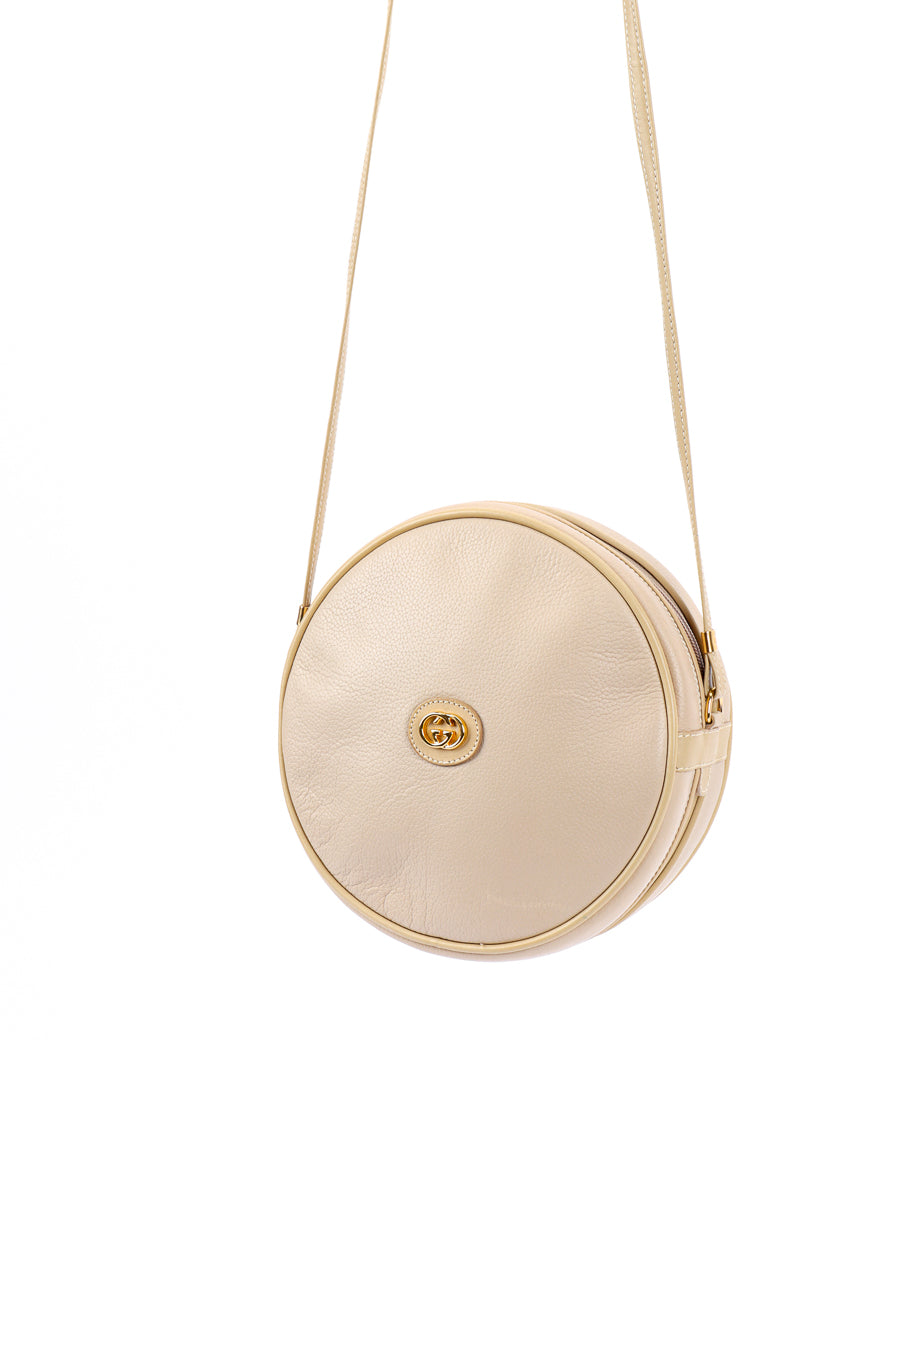 Vintage Gucci Leather Circle Bag 3/4 front suspended @recessla